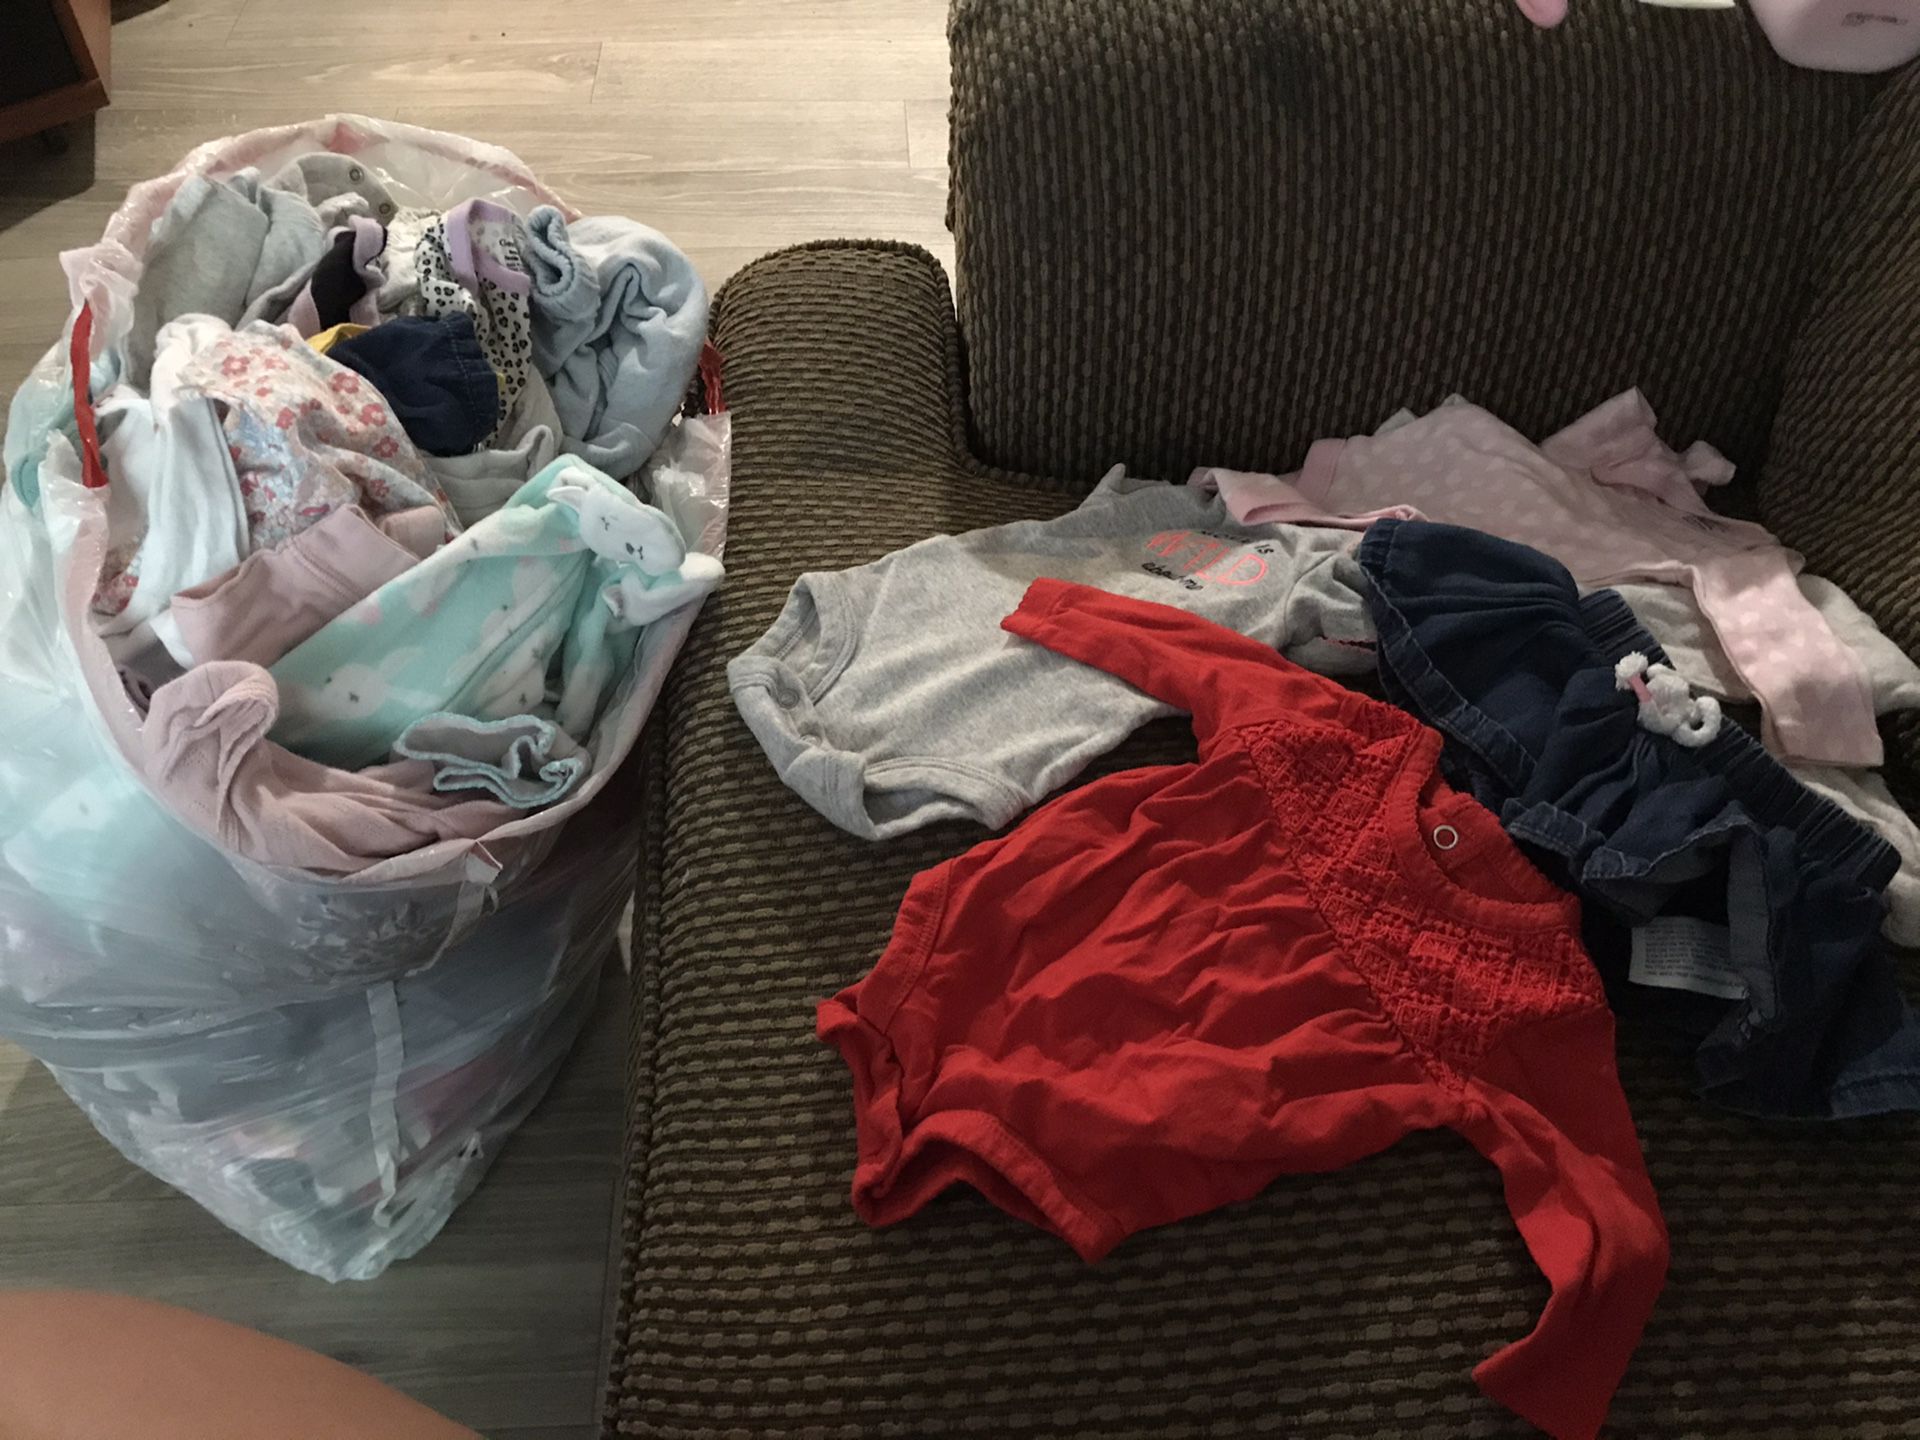 Full bag of Newborn girl clothes